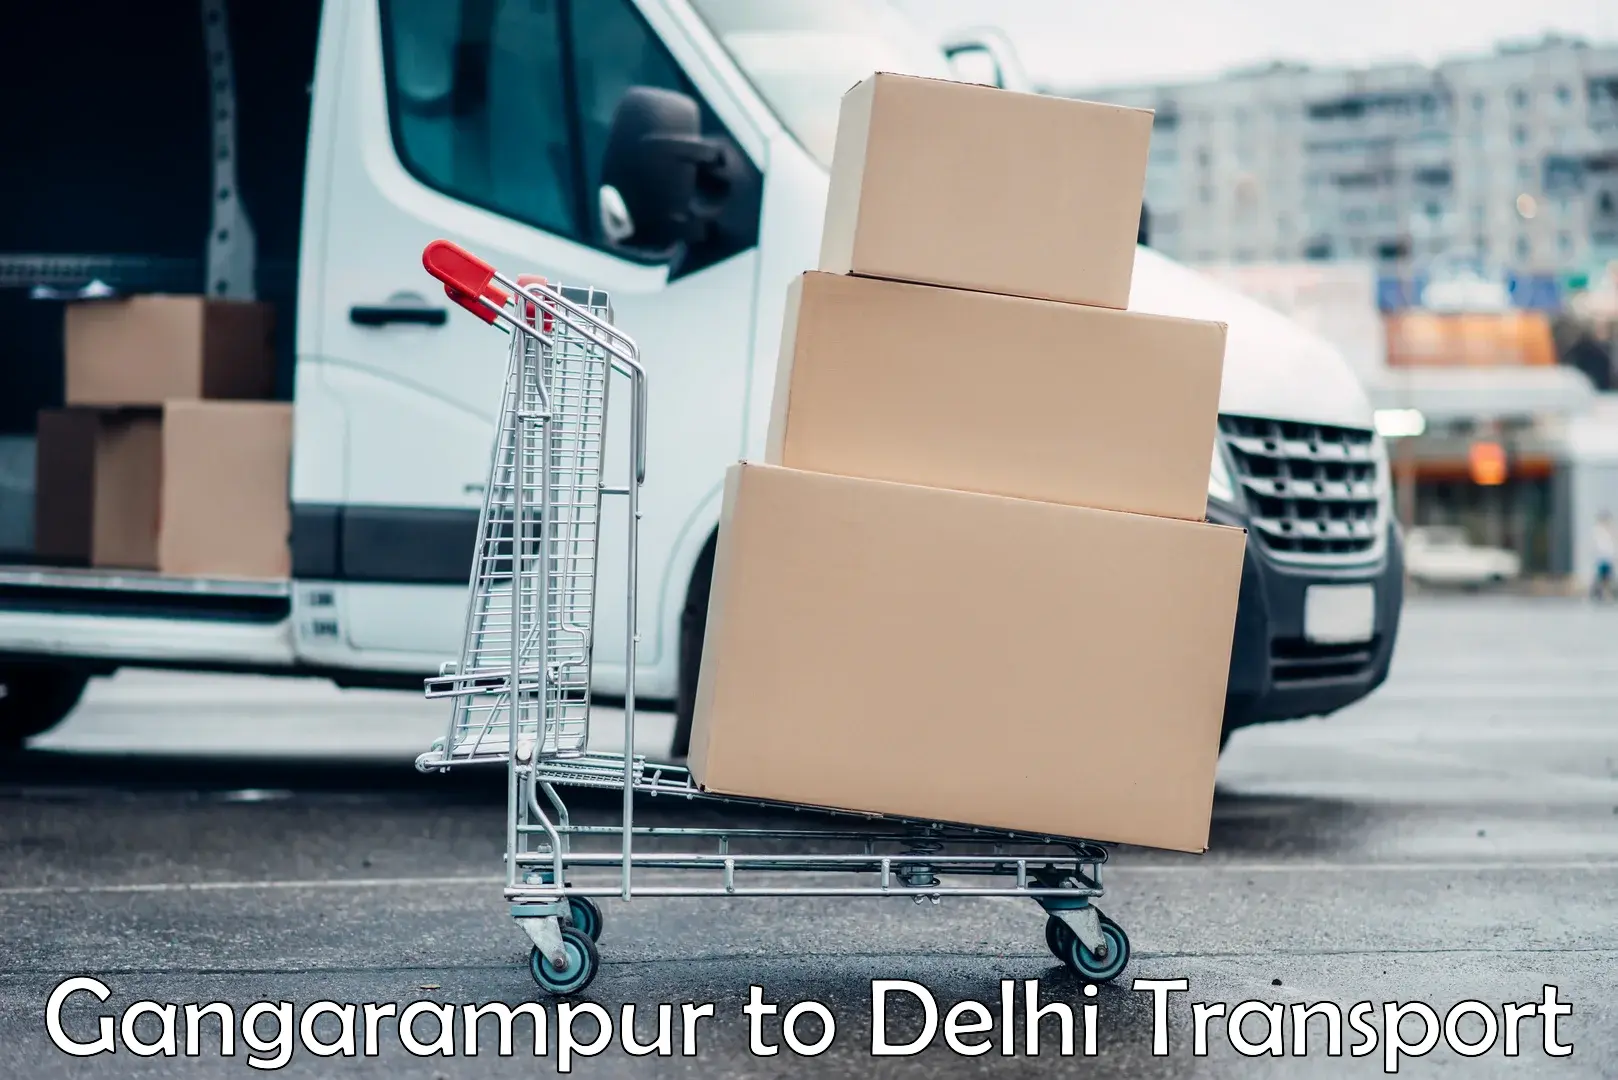 Cycle transportation service Gangarampur to Delhi